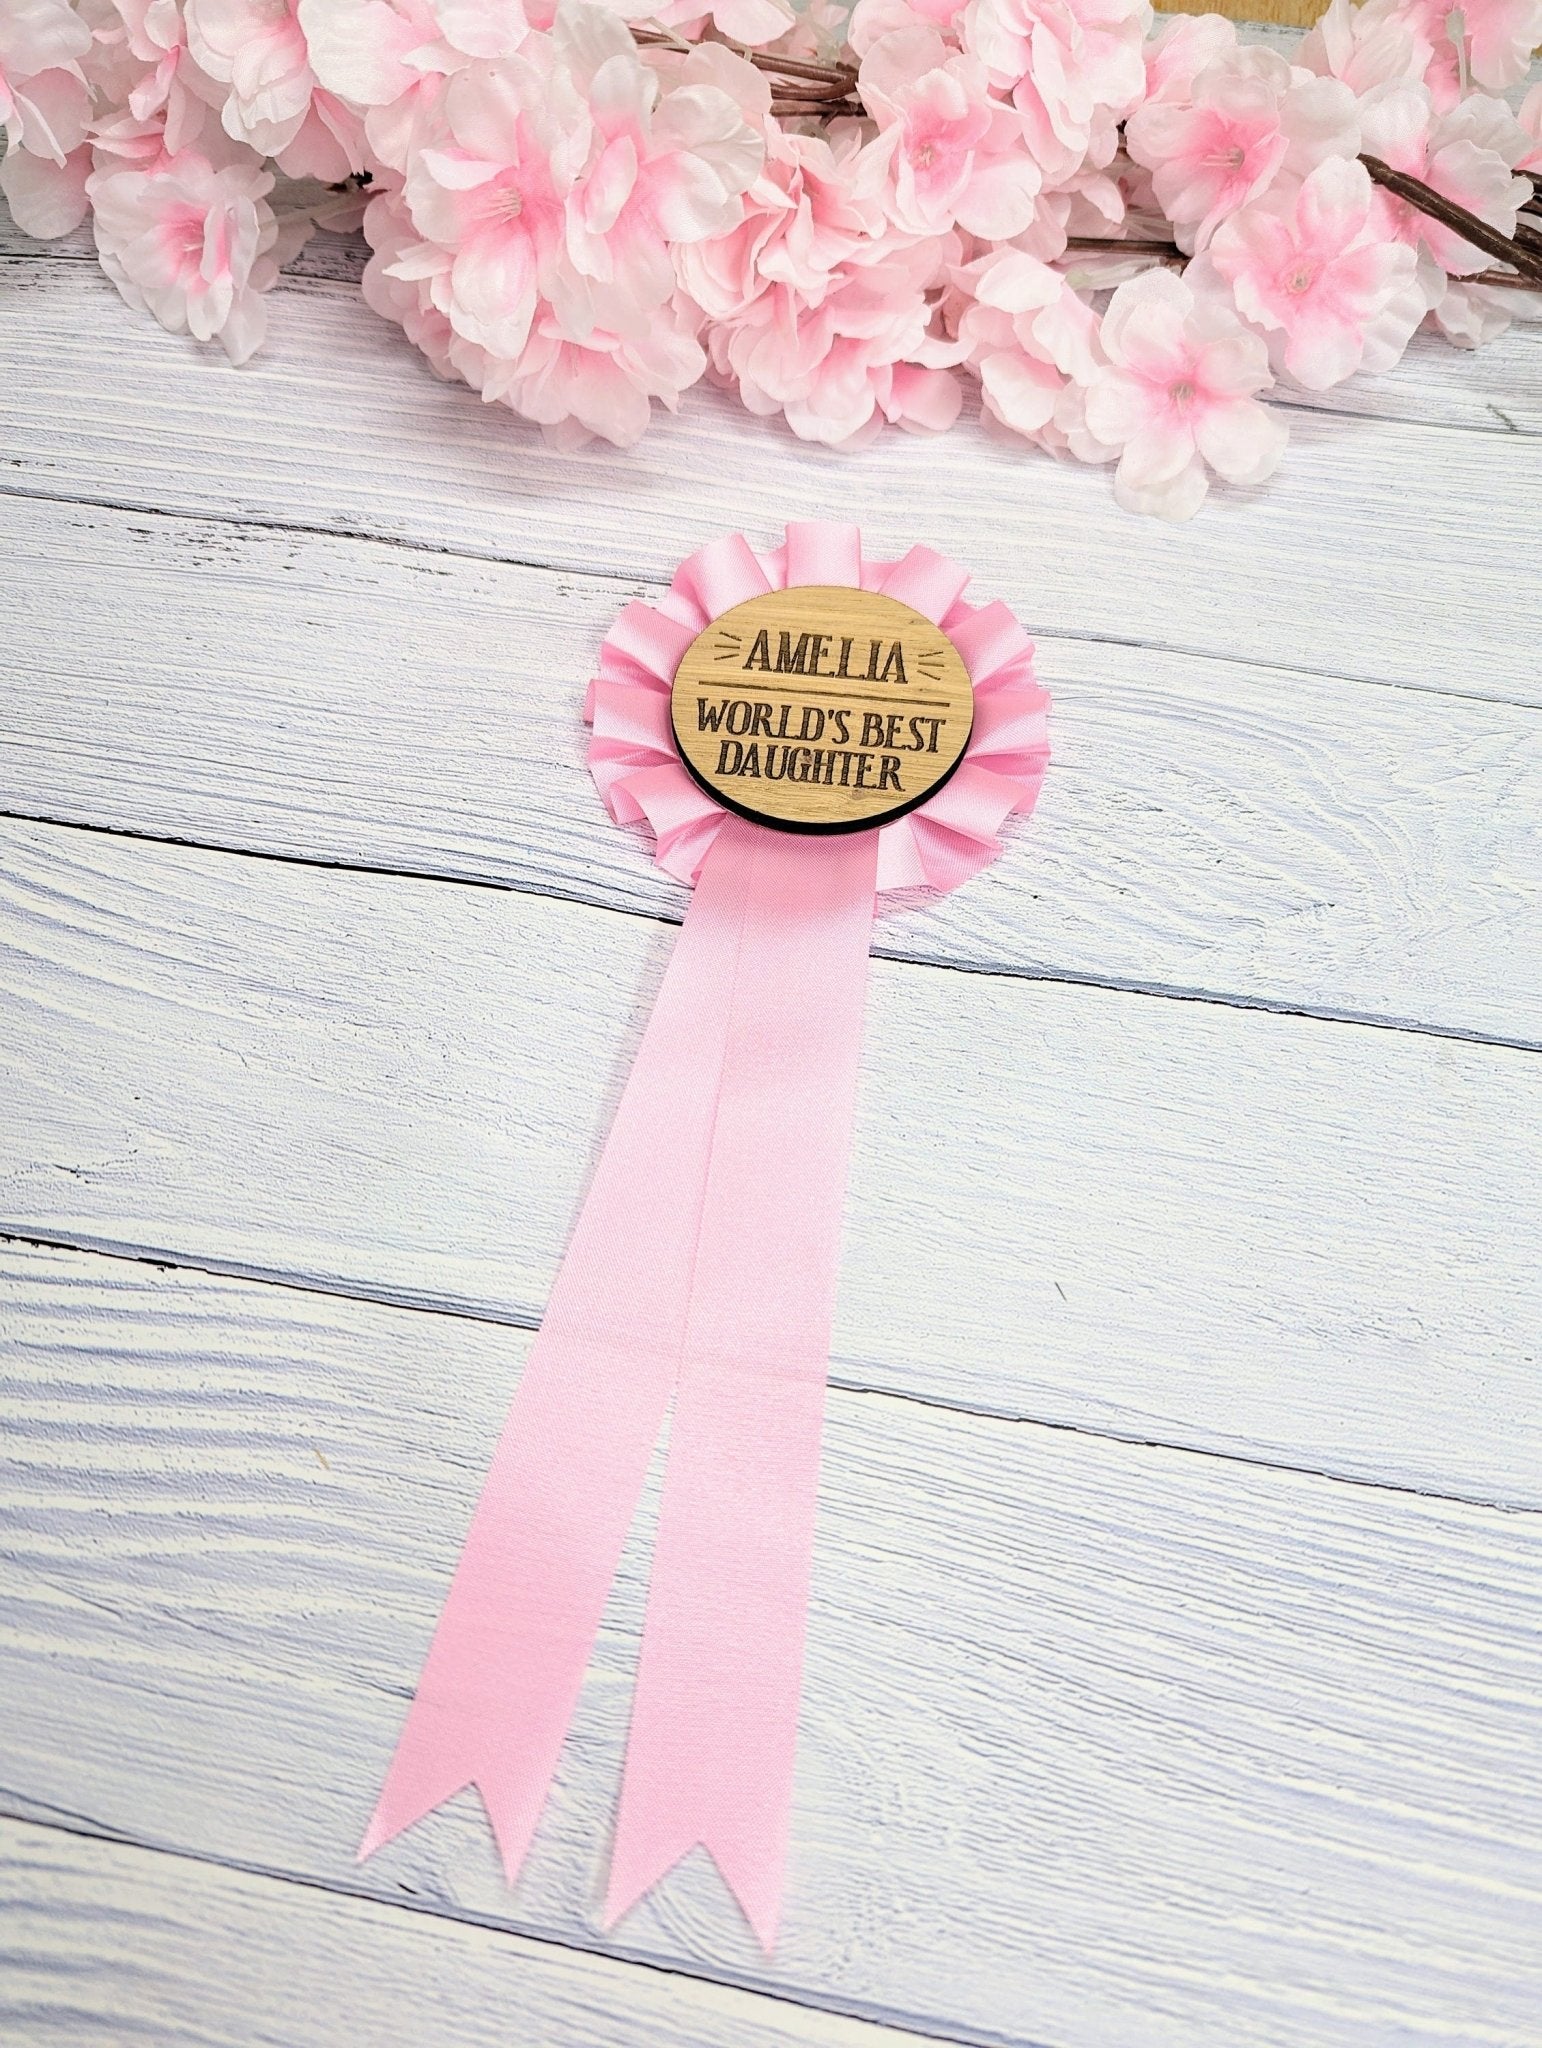 World's Best Daughter, Personalised Wooden Rosette | Pink Award Ribbon | Birthday Gift | Custom Name | Oak Veneer | Handcrafted in the UK - CherryGroveCraft